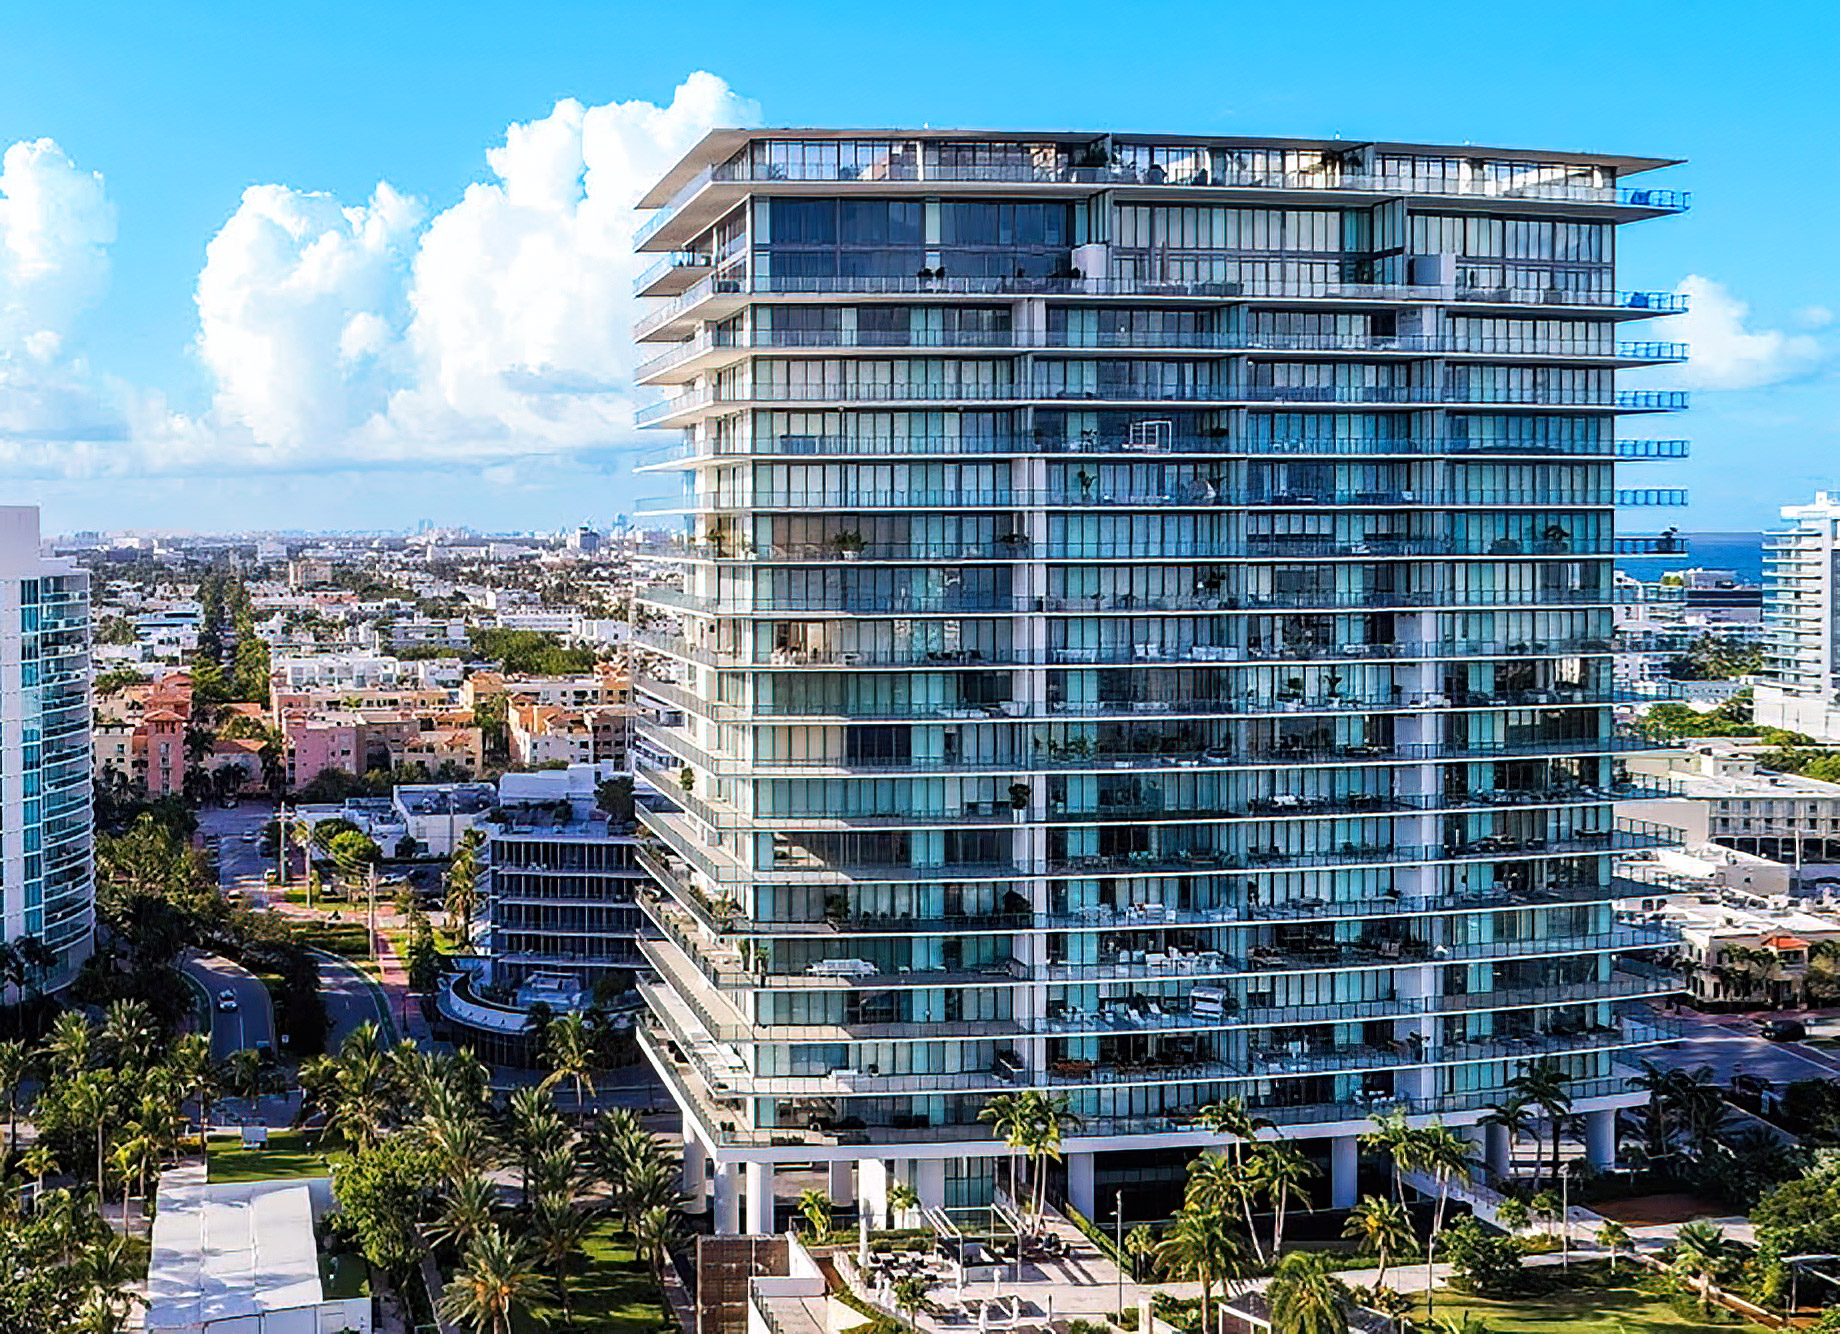 Apogee Condominium – South Beach, Miami, Florida